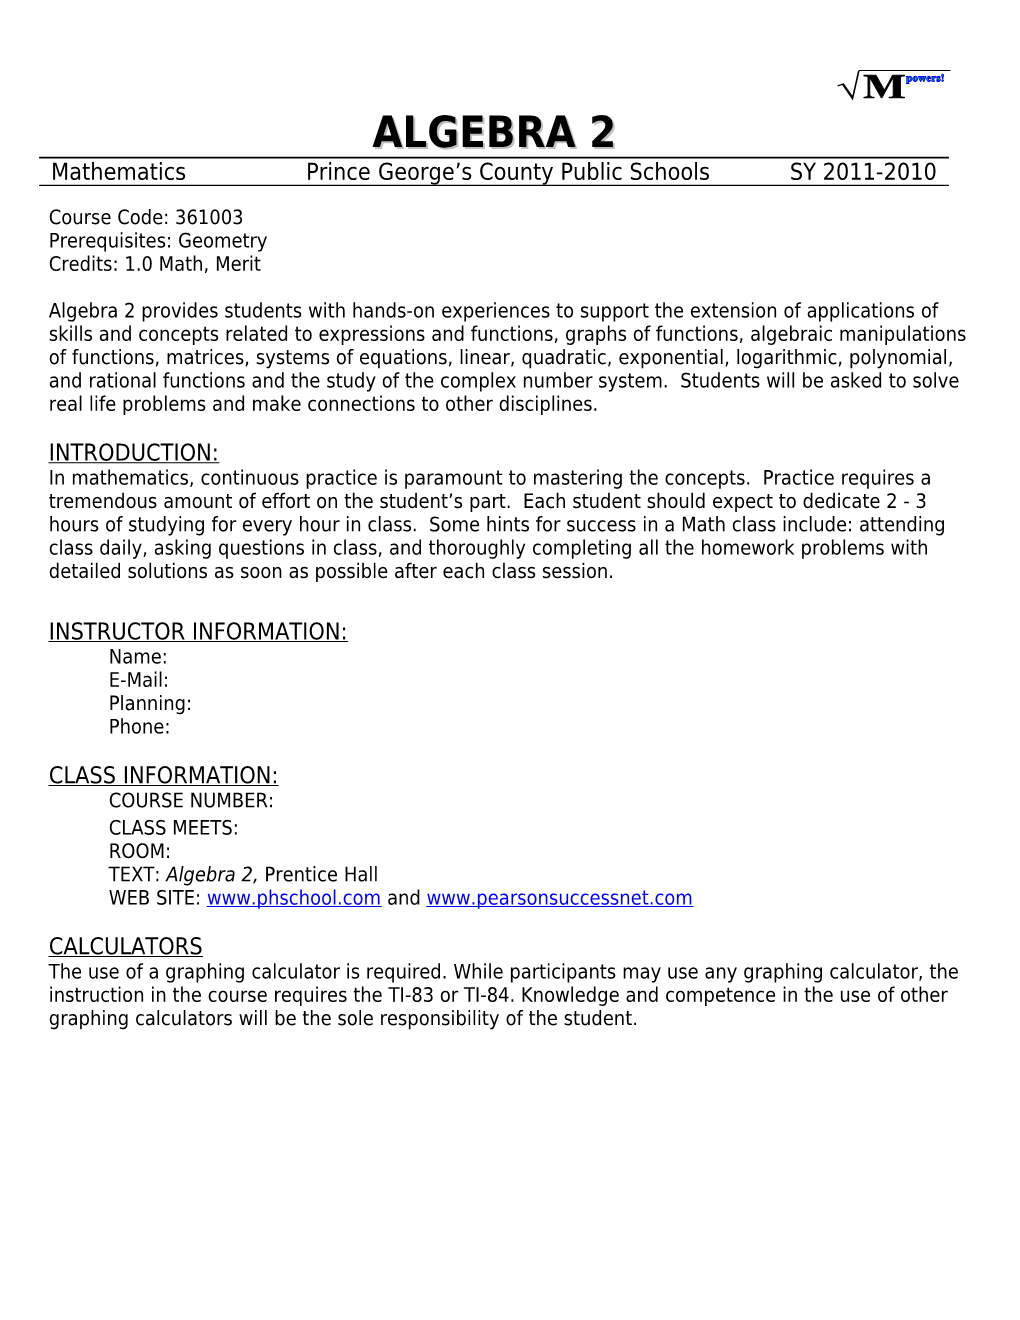 Mathematics Prince George S County Public Schools SY 2011-2010